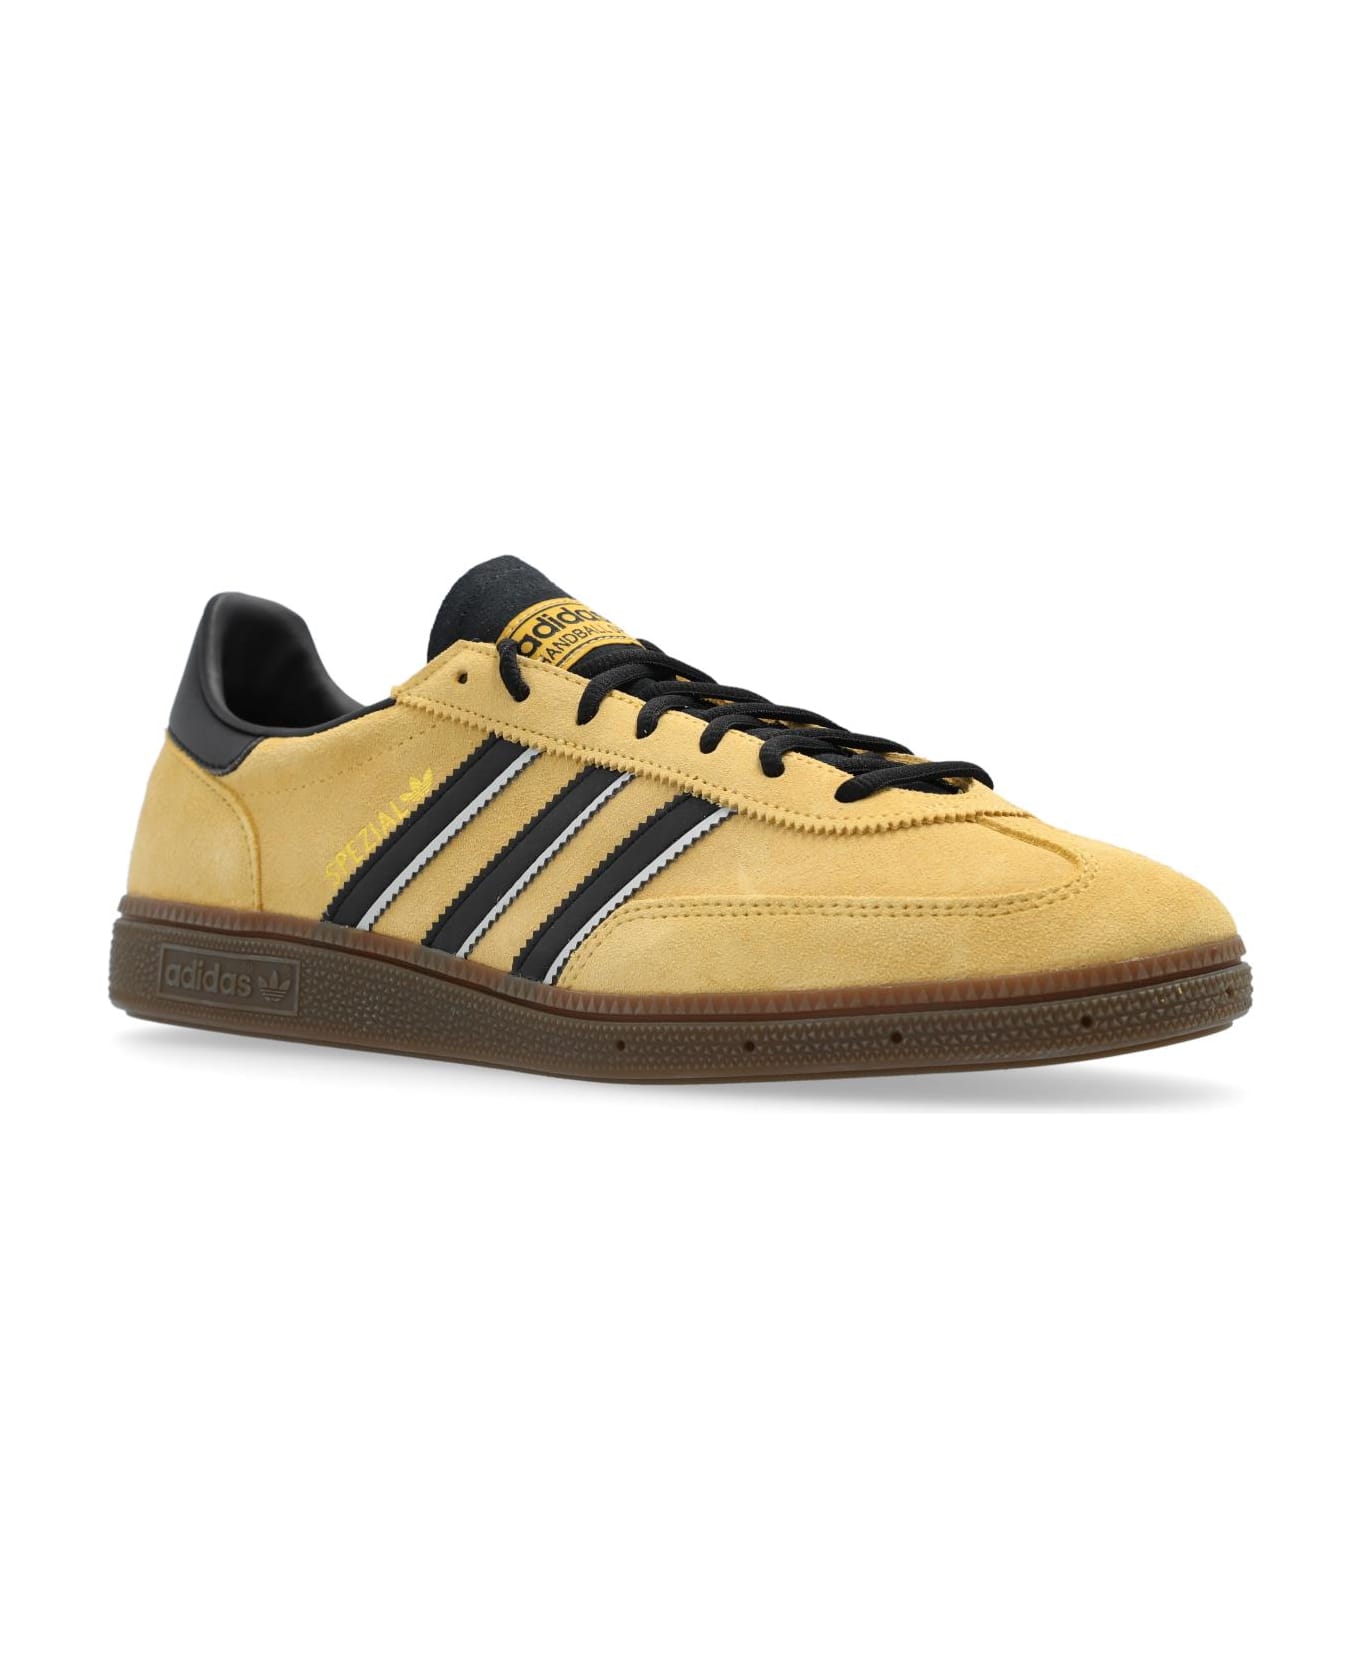 Adidas Originals 'handball Spezial' Sneakers - Yellow